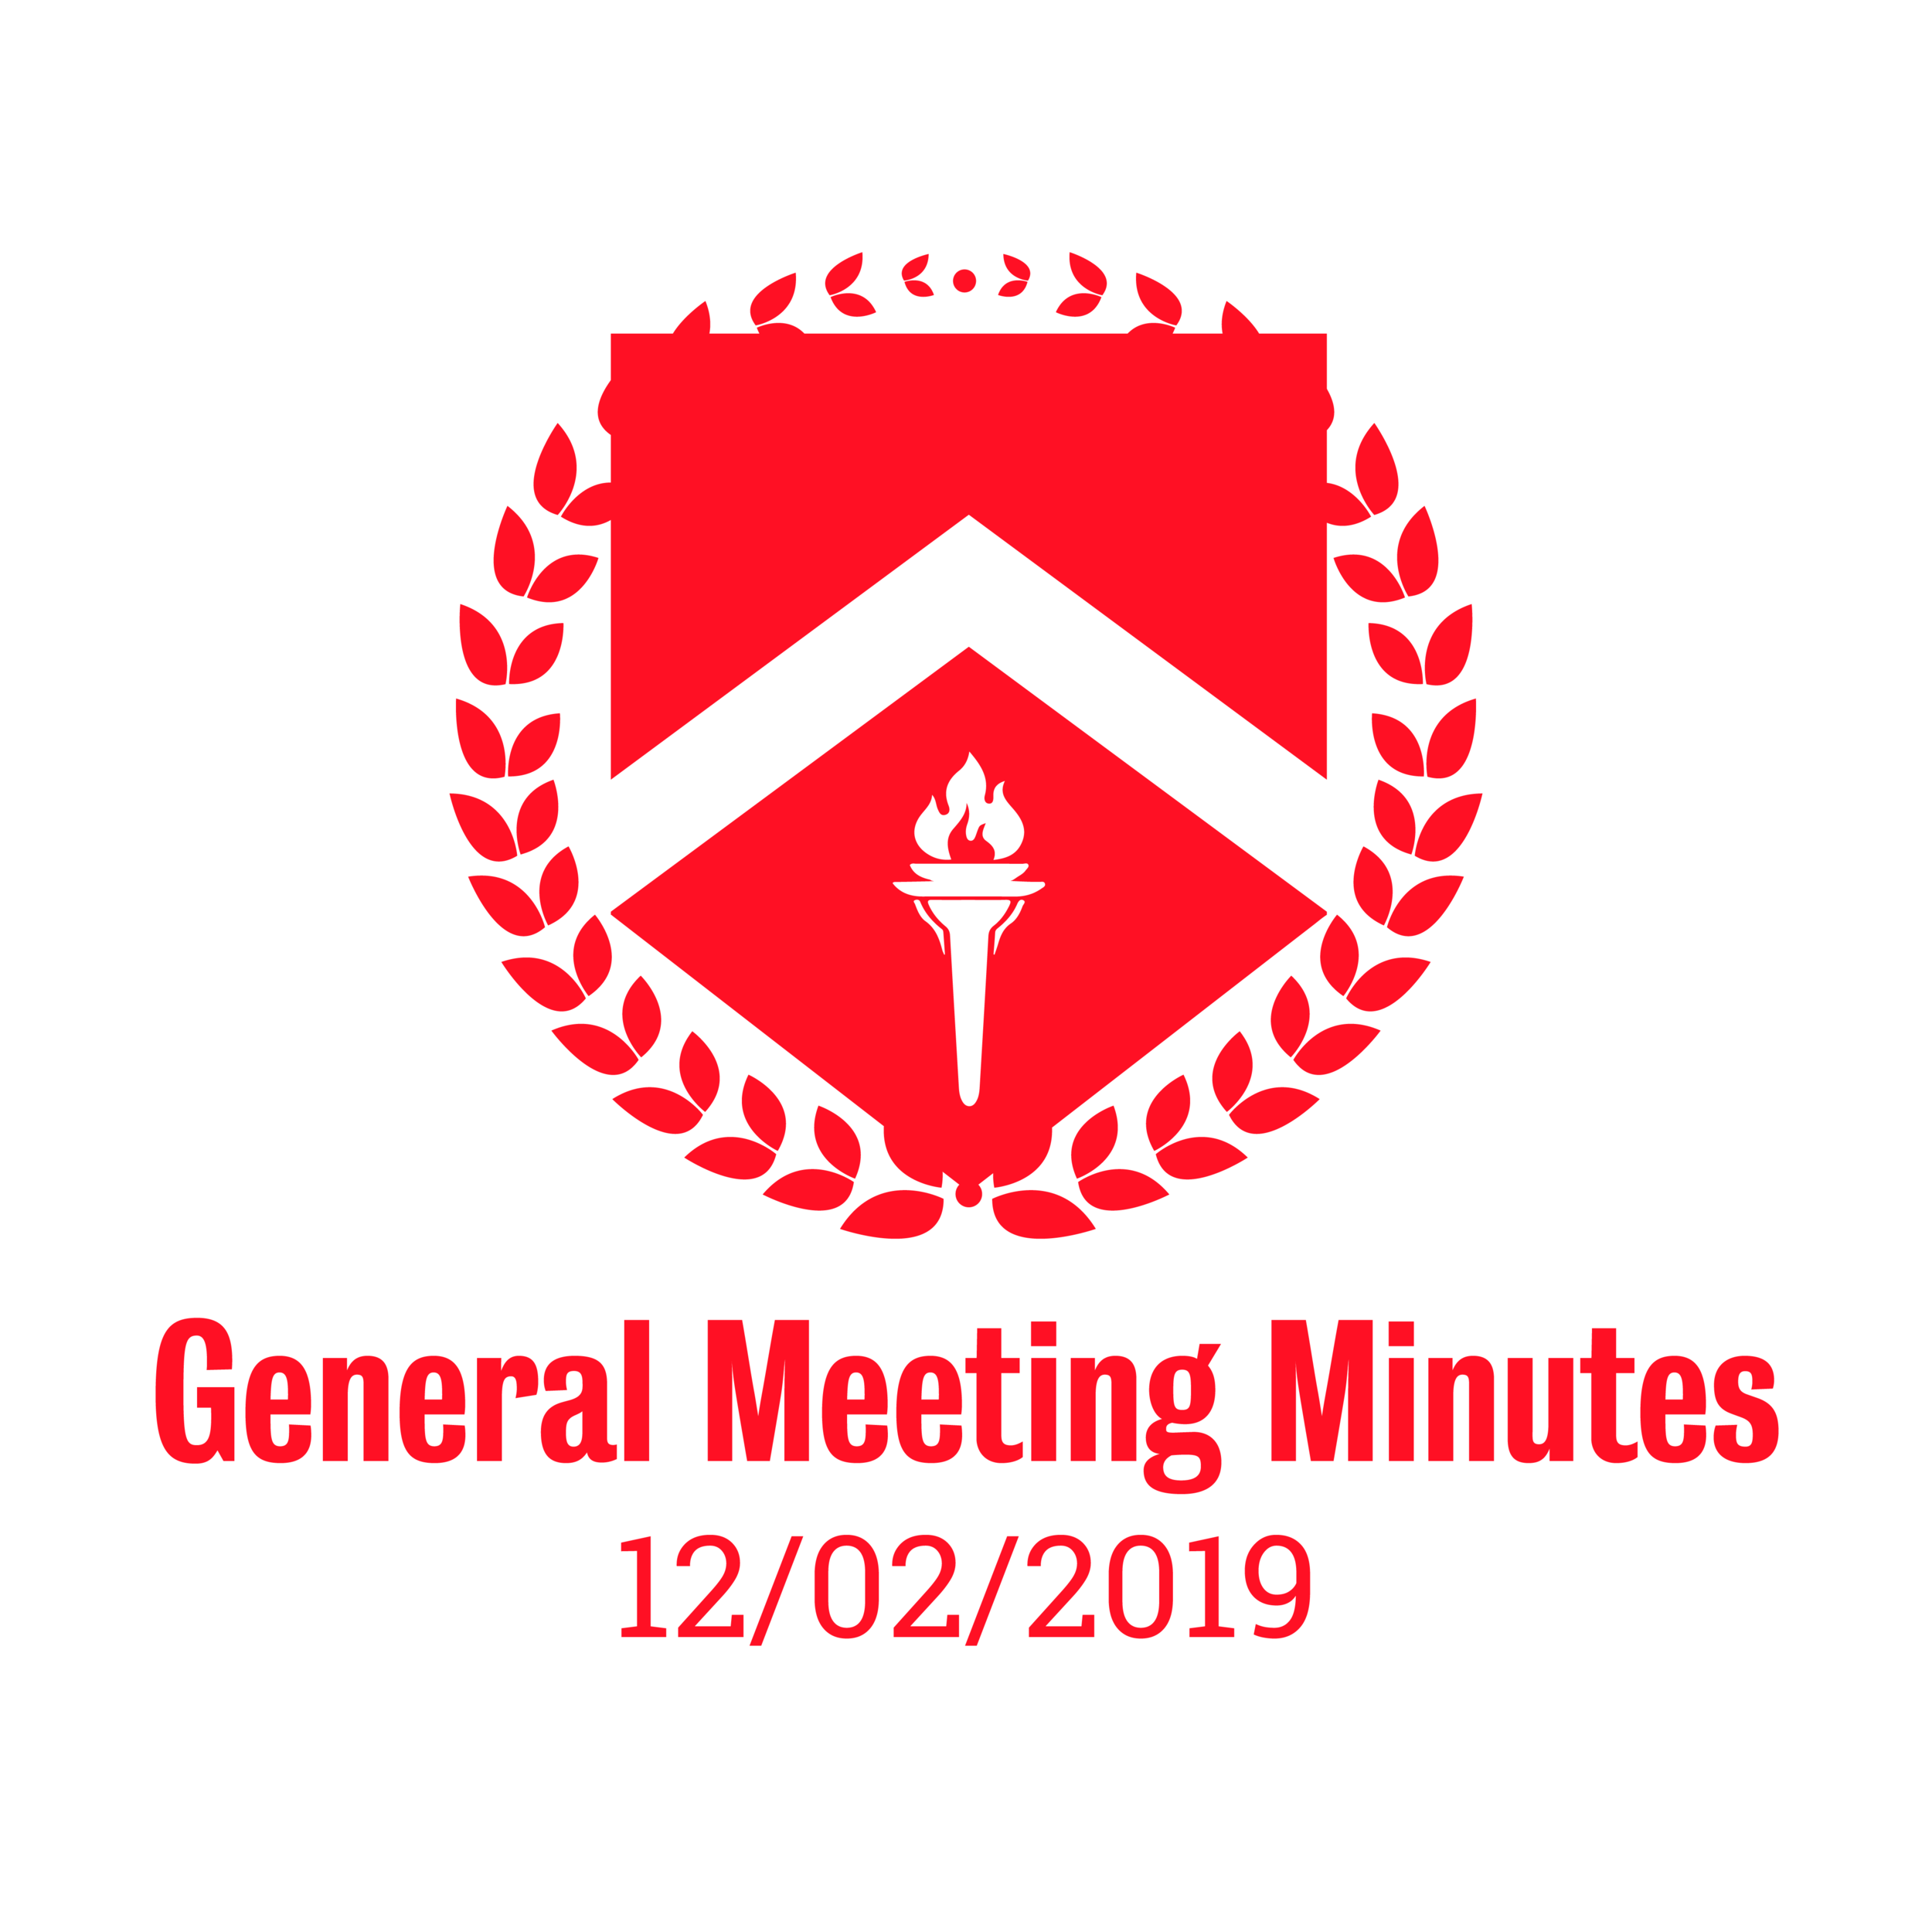 General Meeting Minutes 12/02/2019